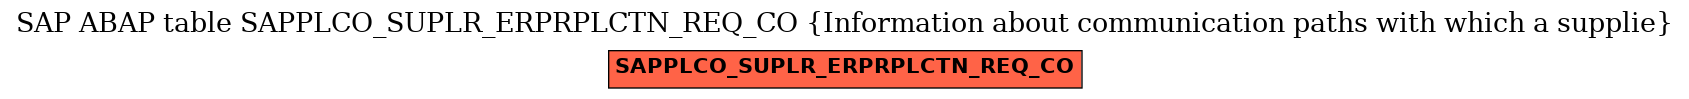 E-R Diagram for table SAPPLCO_SUPLR_ERPRPLCTN_REQ_CO (Information about communication paths with which a supplie)